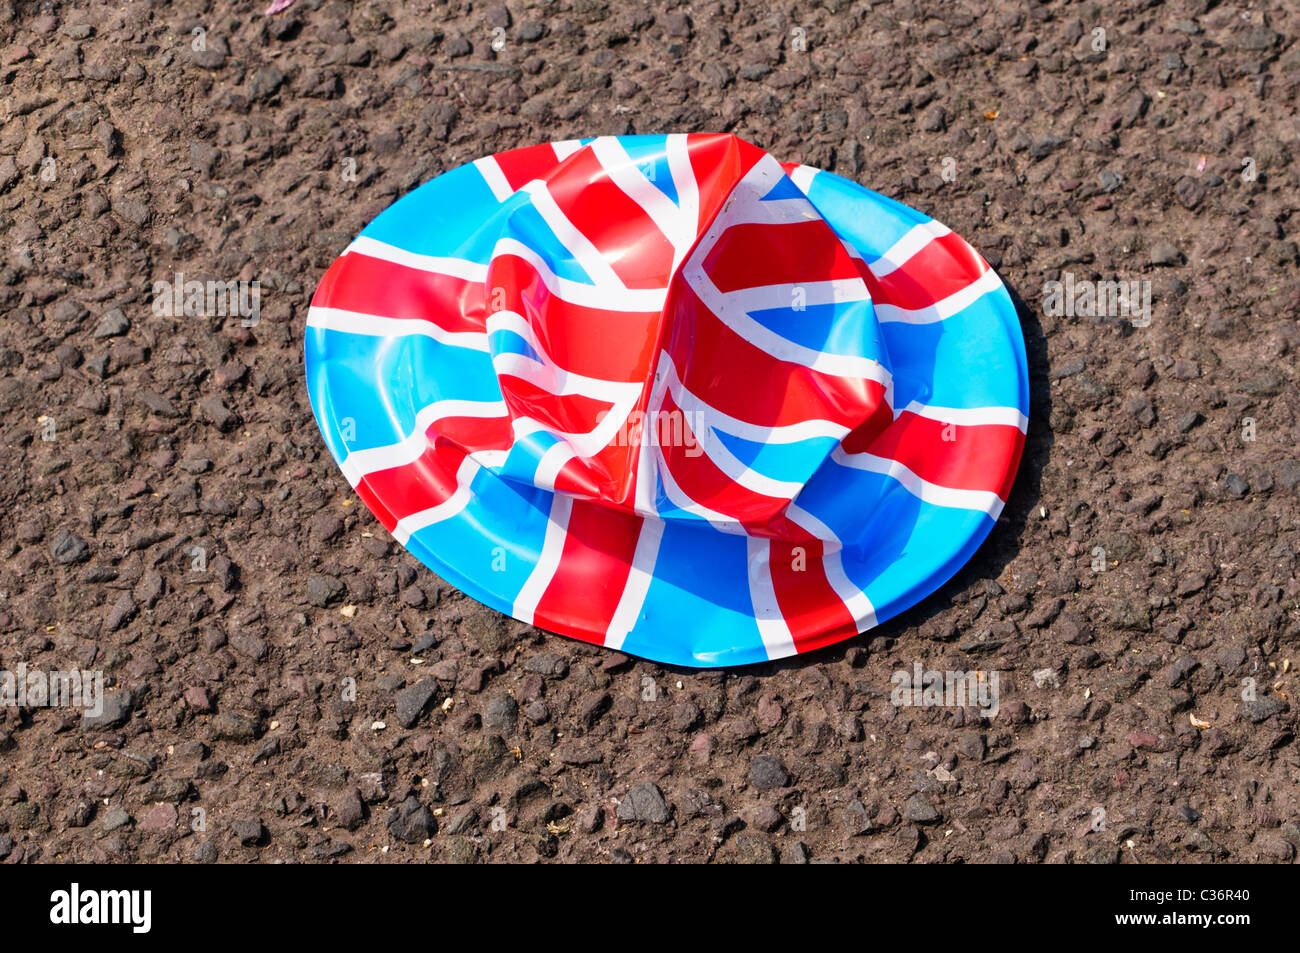 Crushed Union Jack bowler hat lying on the road Stock Photo